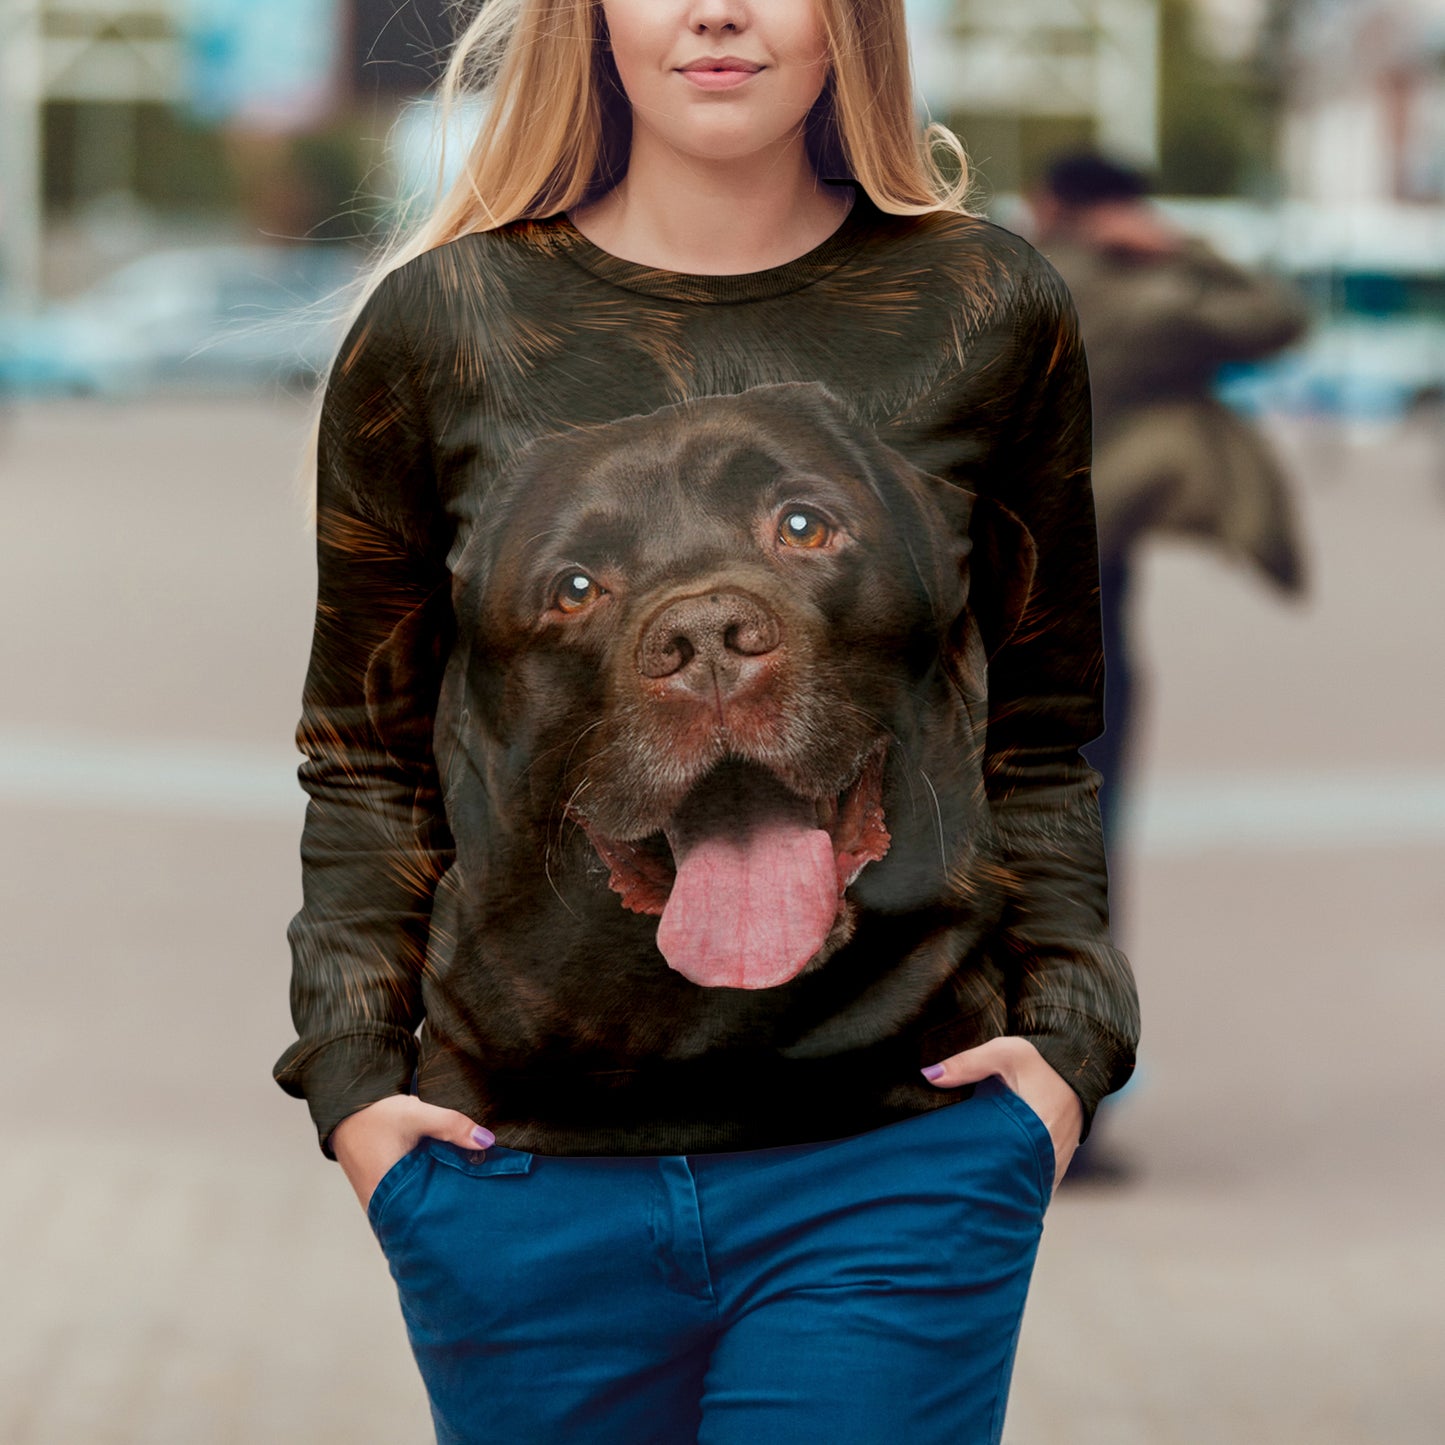 Labrador Sweatshirt V1